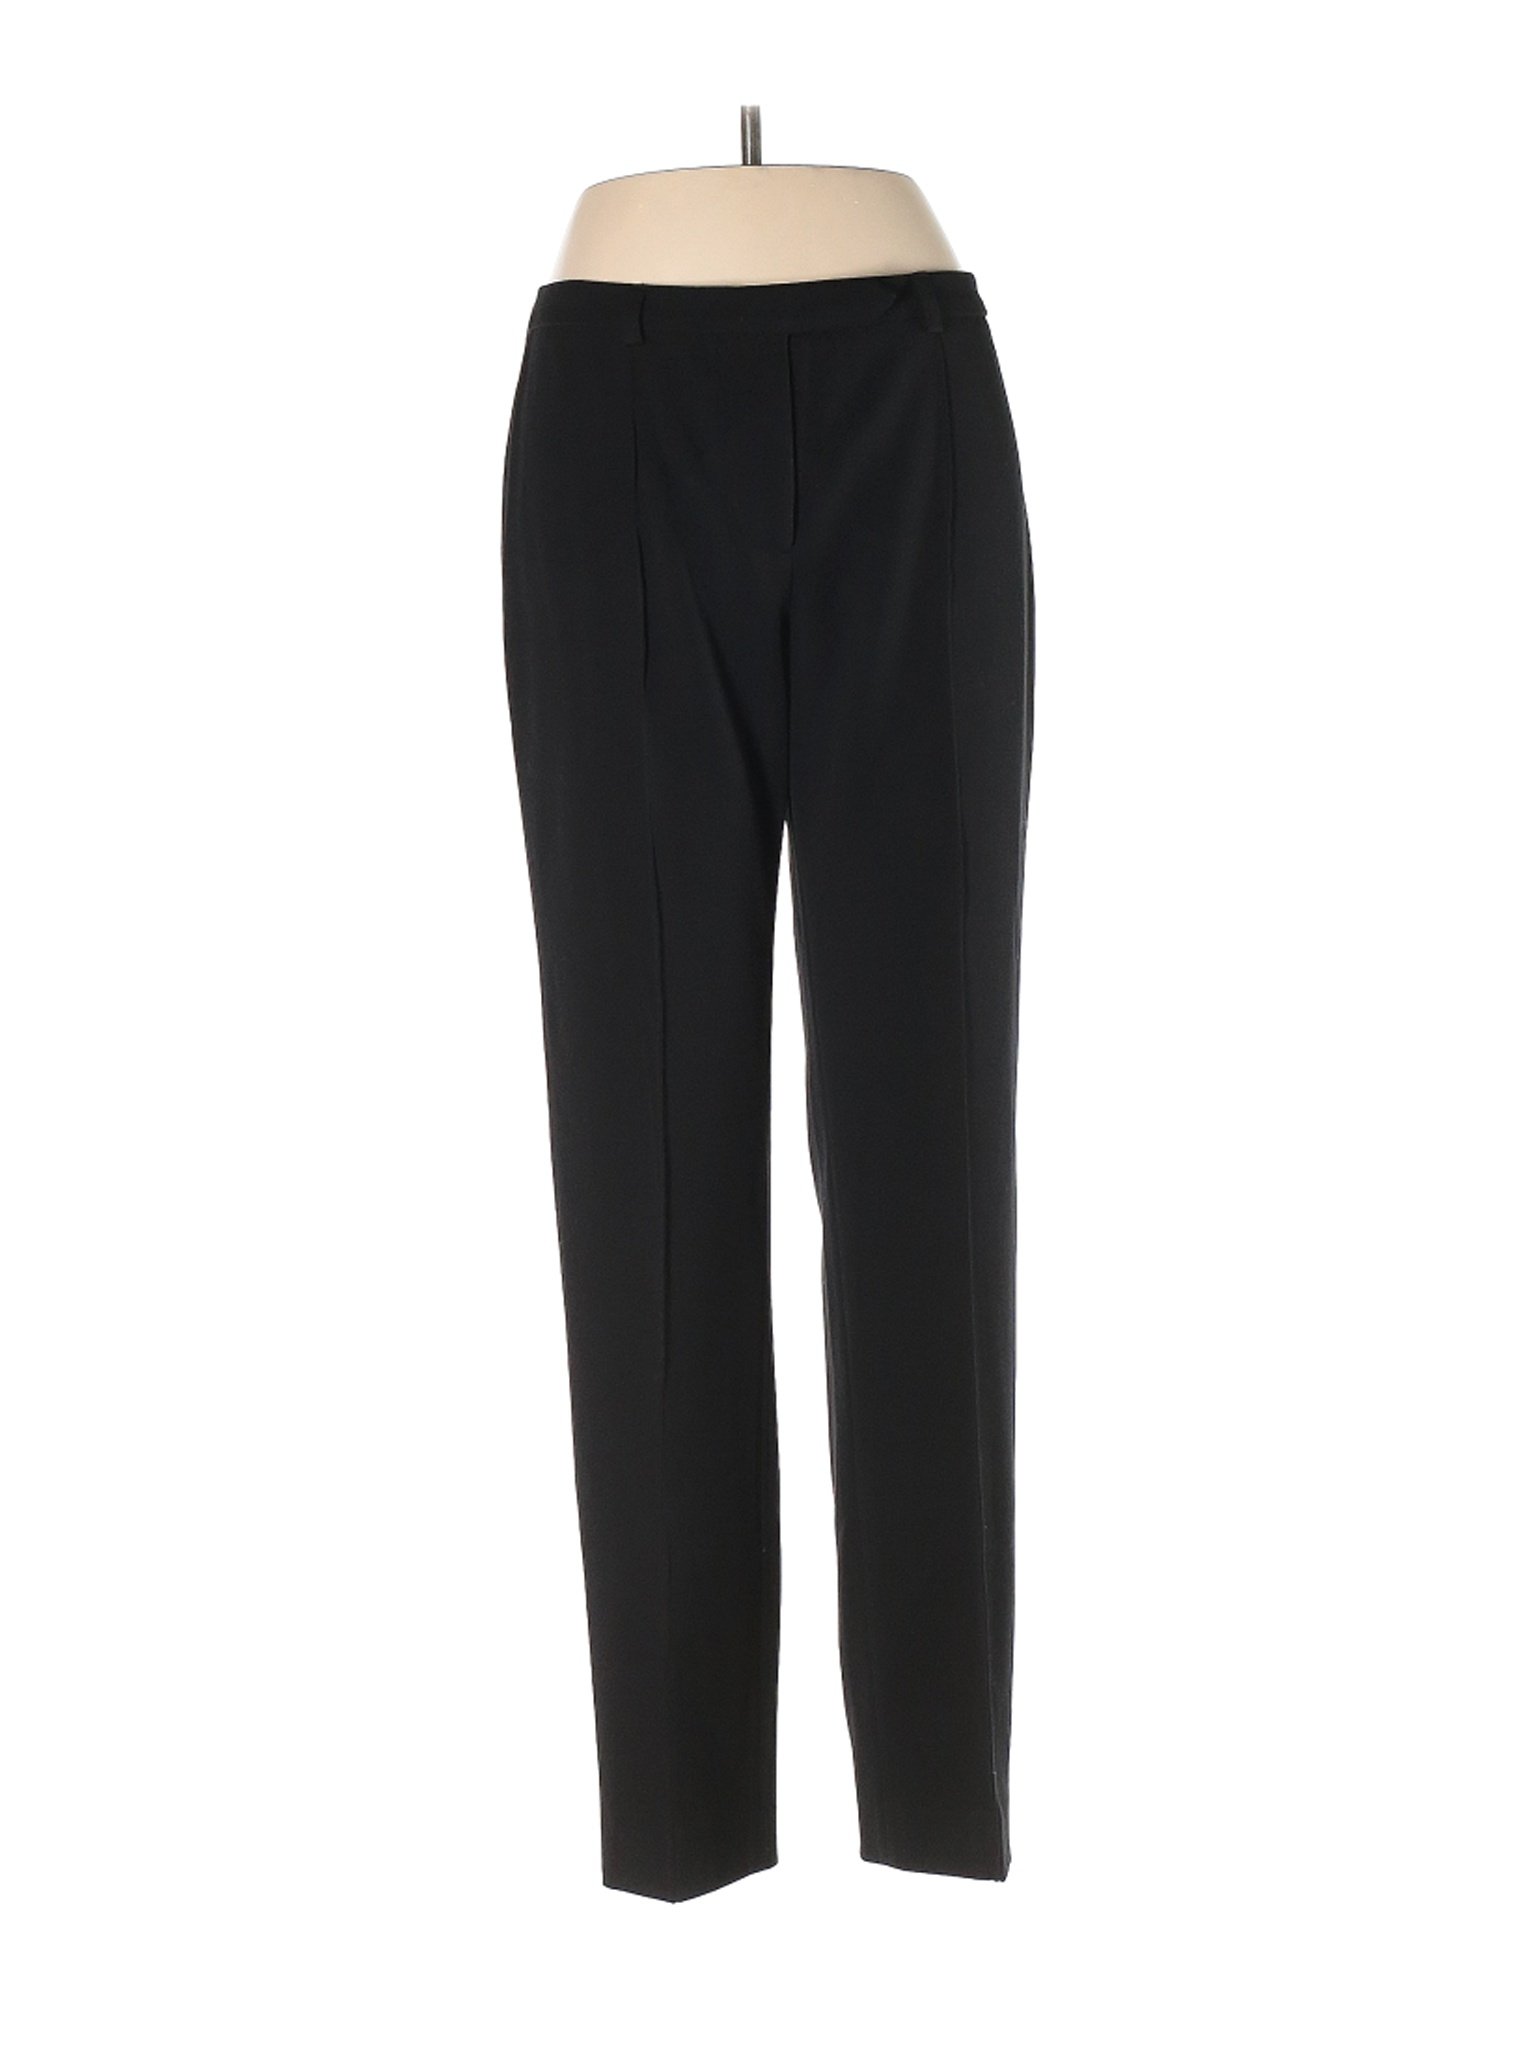 Thalian Women Black Casual Pants 6 | eBay